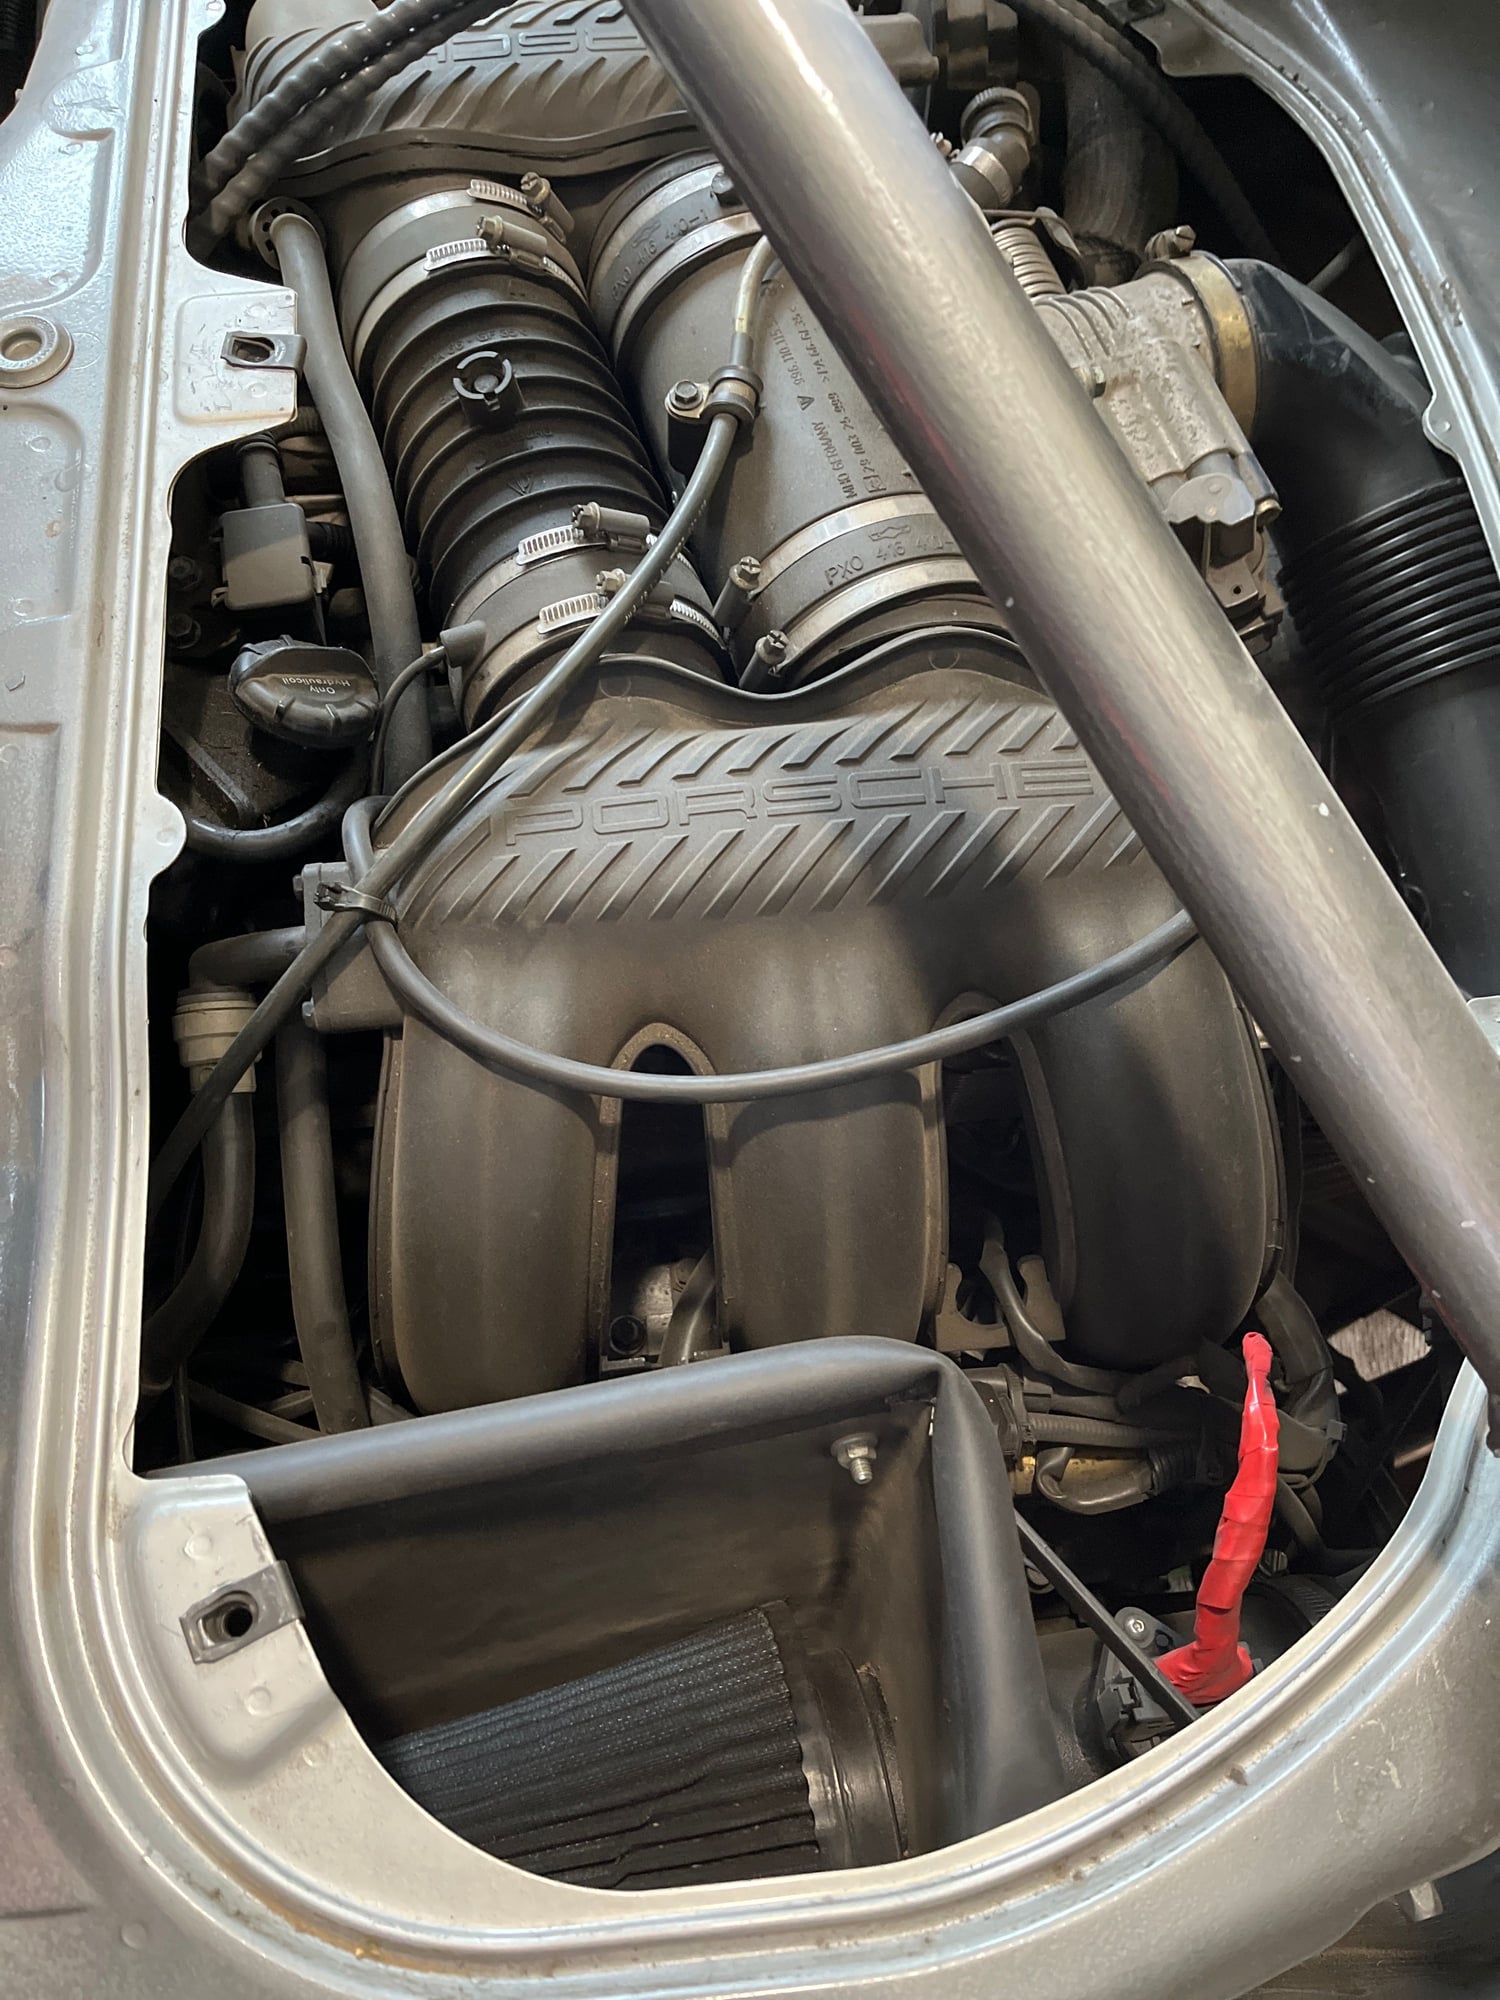 Engine - Complete - 2.7 L 2002 Boxster engine - Used - 1998 to 2004 Porsche Boxster - Rock Falls, IL 61071, United States